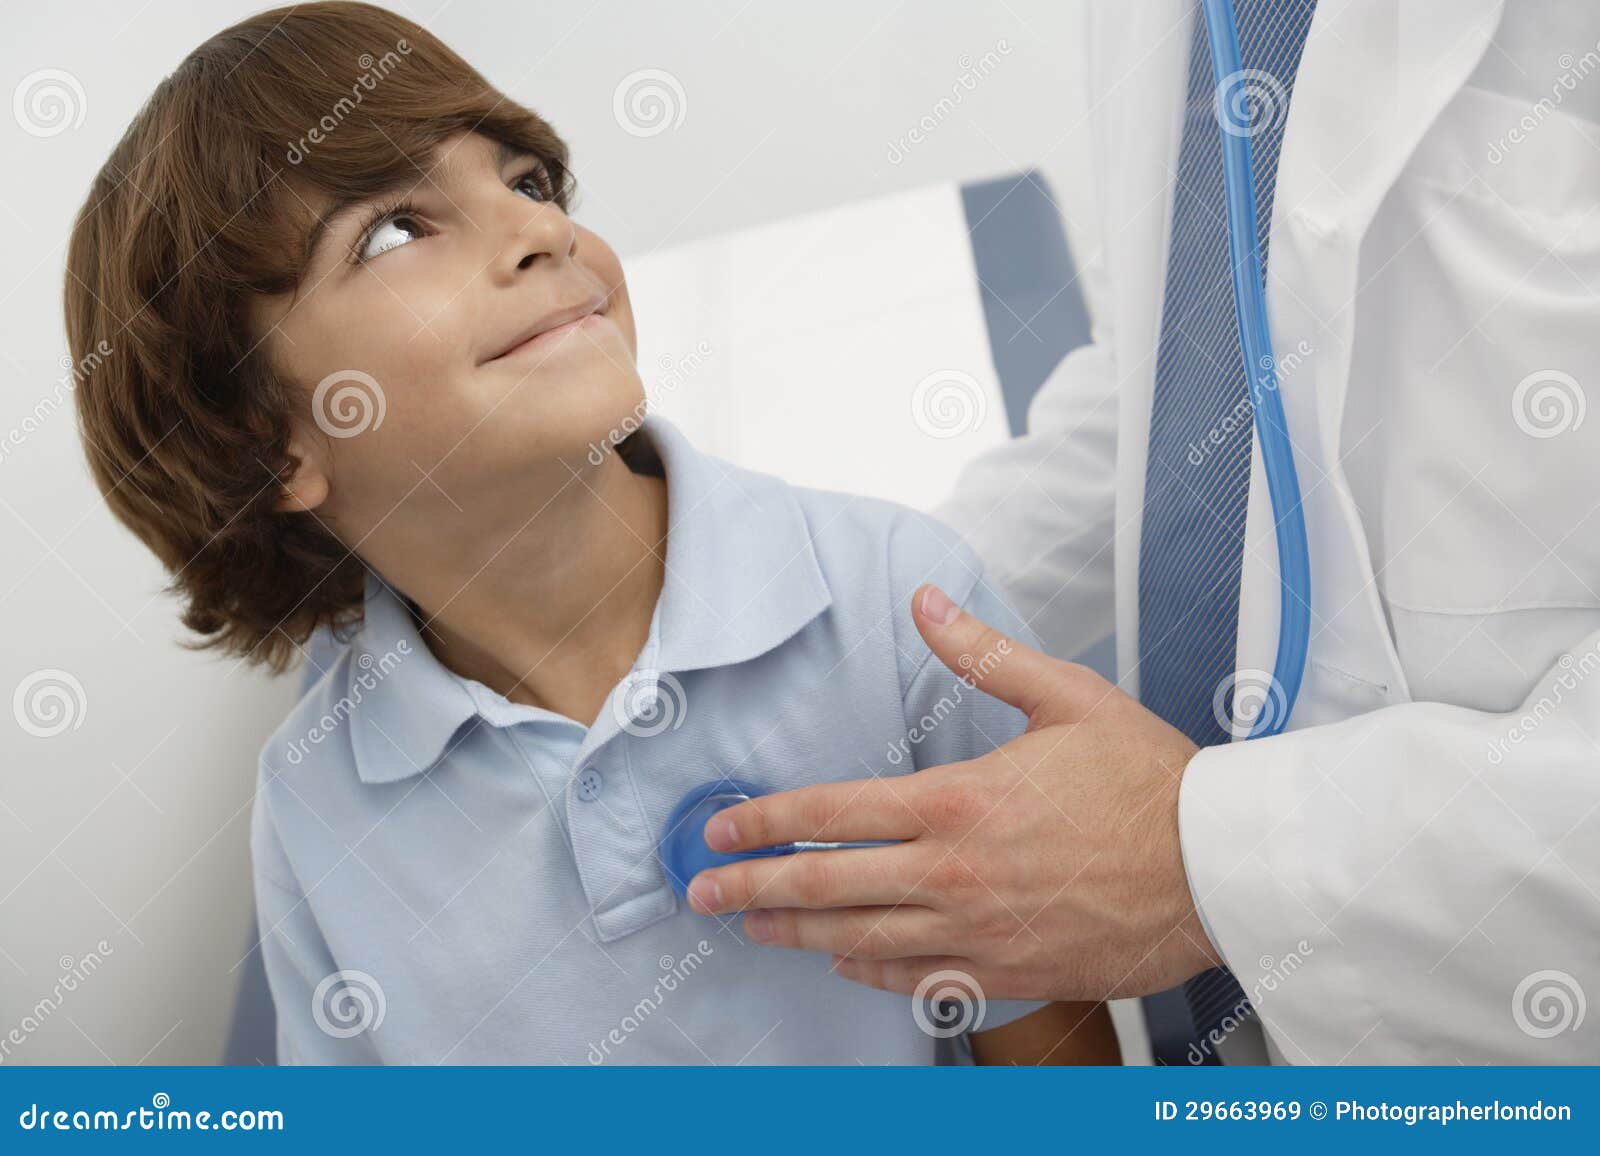 Doctor examined. Врач осматривает мальчика. Подросток у мужского врача. Doctor examining boy. Doctor examining a teenage boy with a stethoscope stock phot.